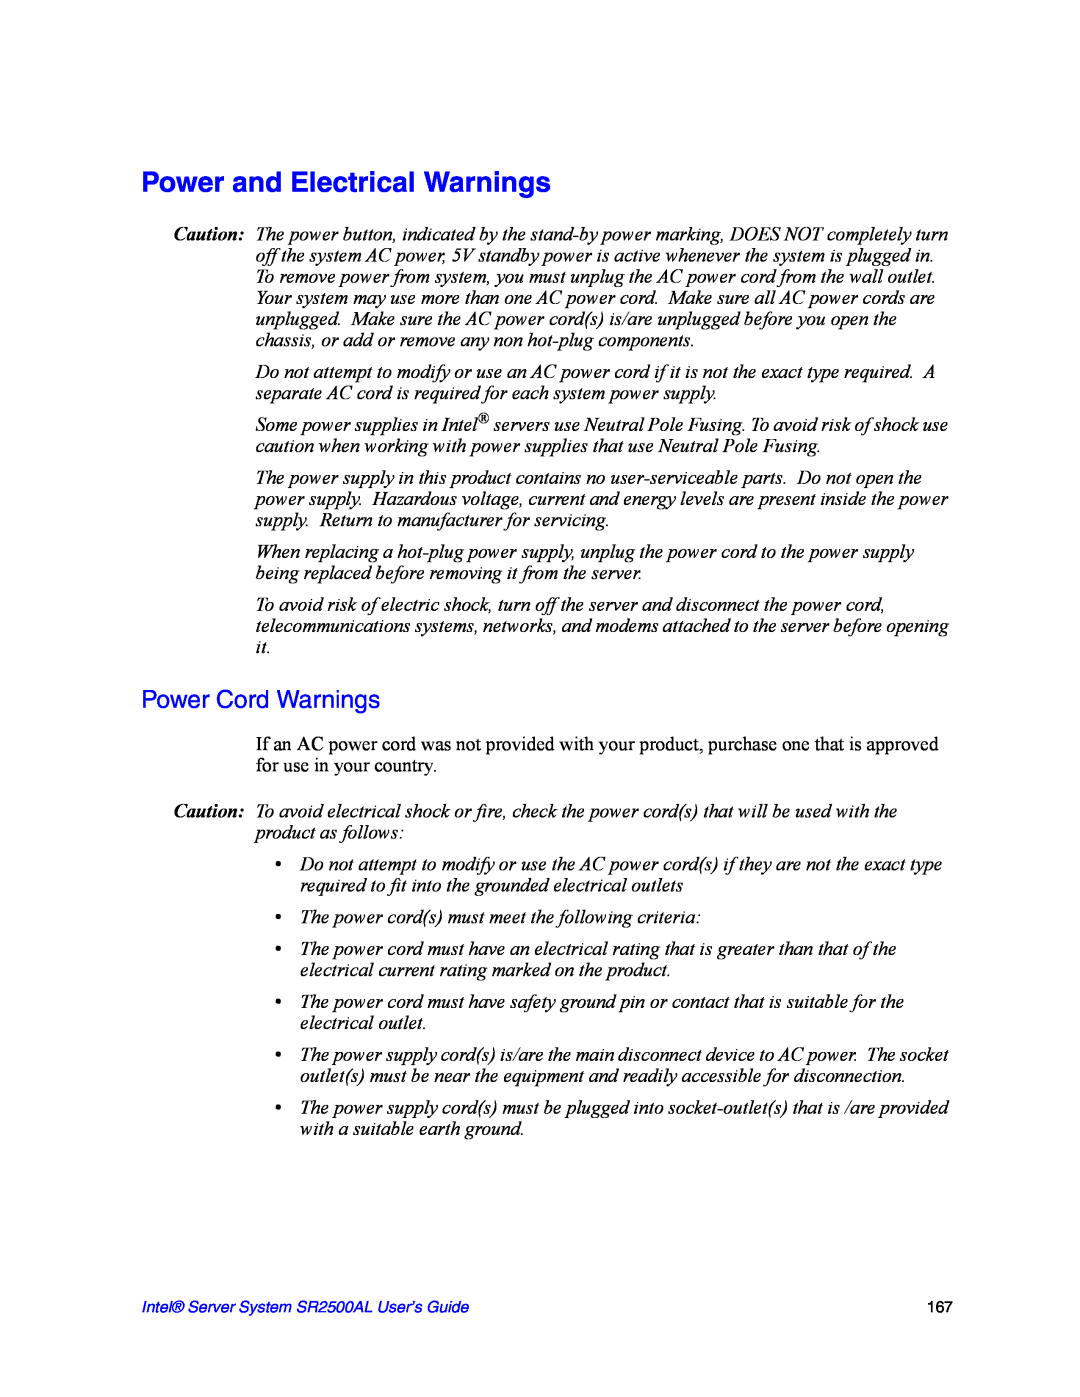 Intel SR2500AL manual Power and Electrical Warnings, Power Cord Warnings 